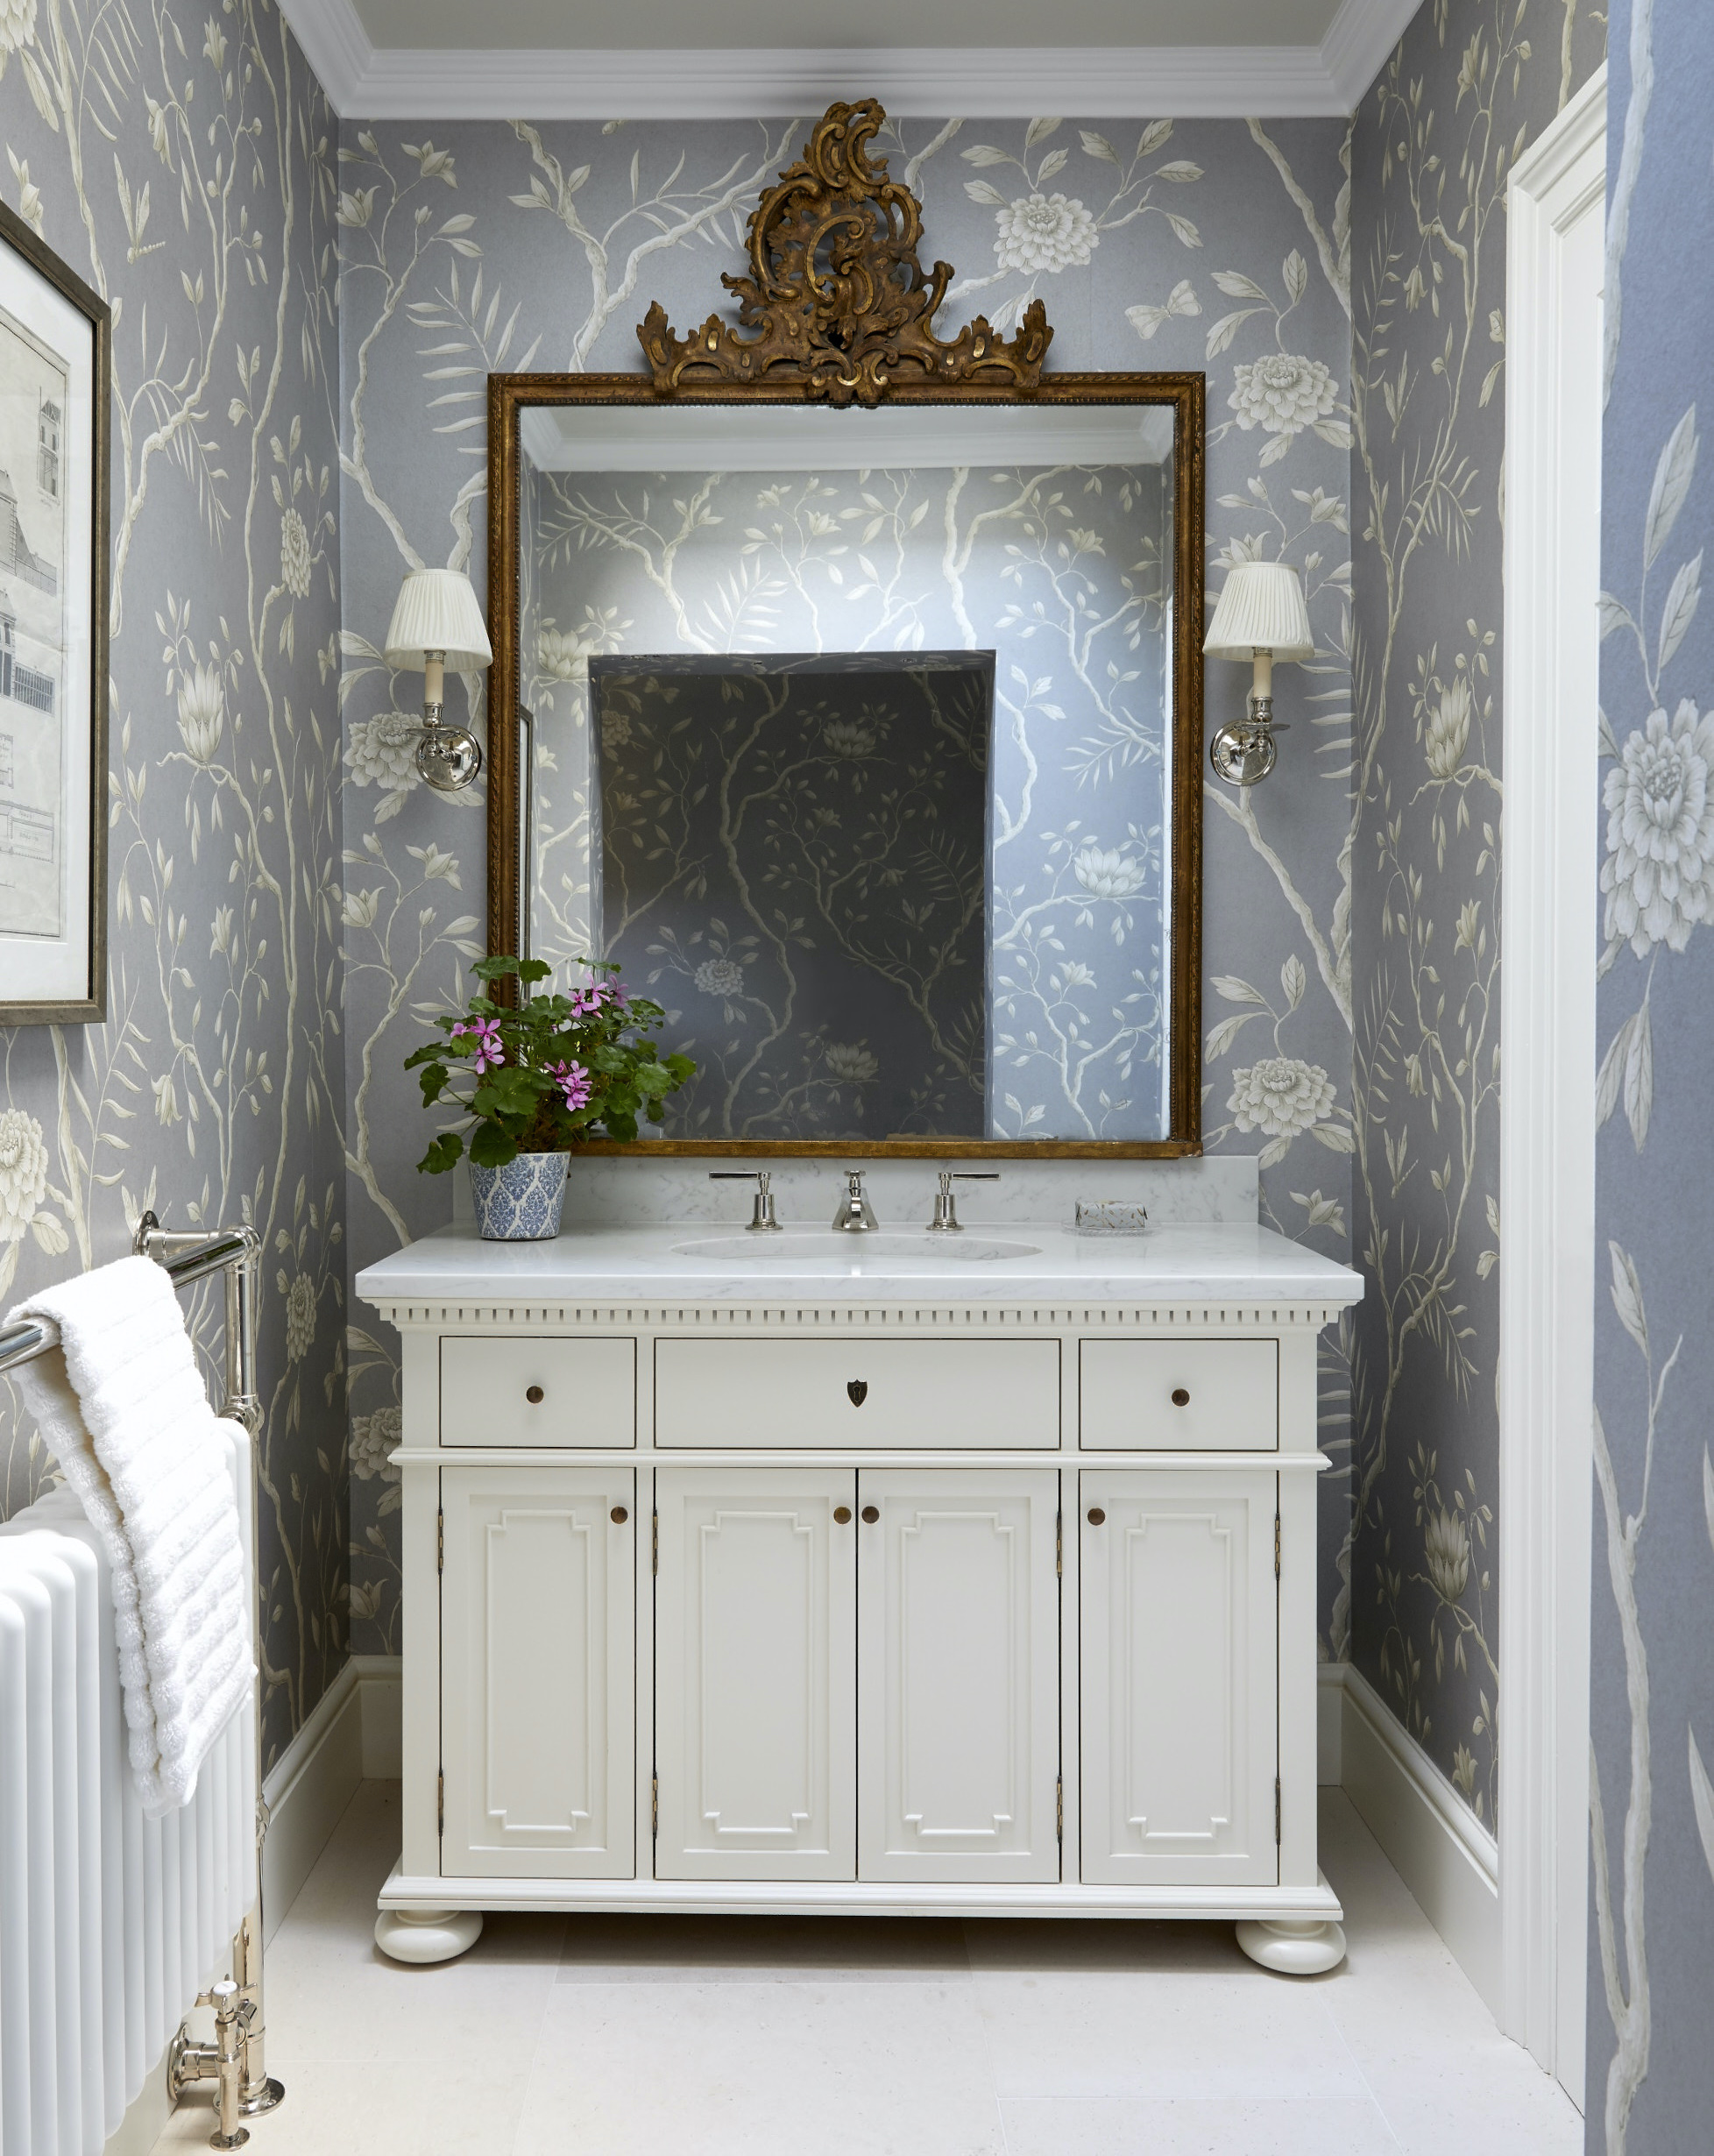 Blue wallpaper with rose bush design, white sink cabinet